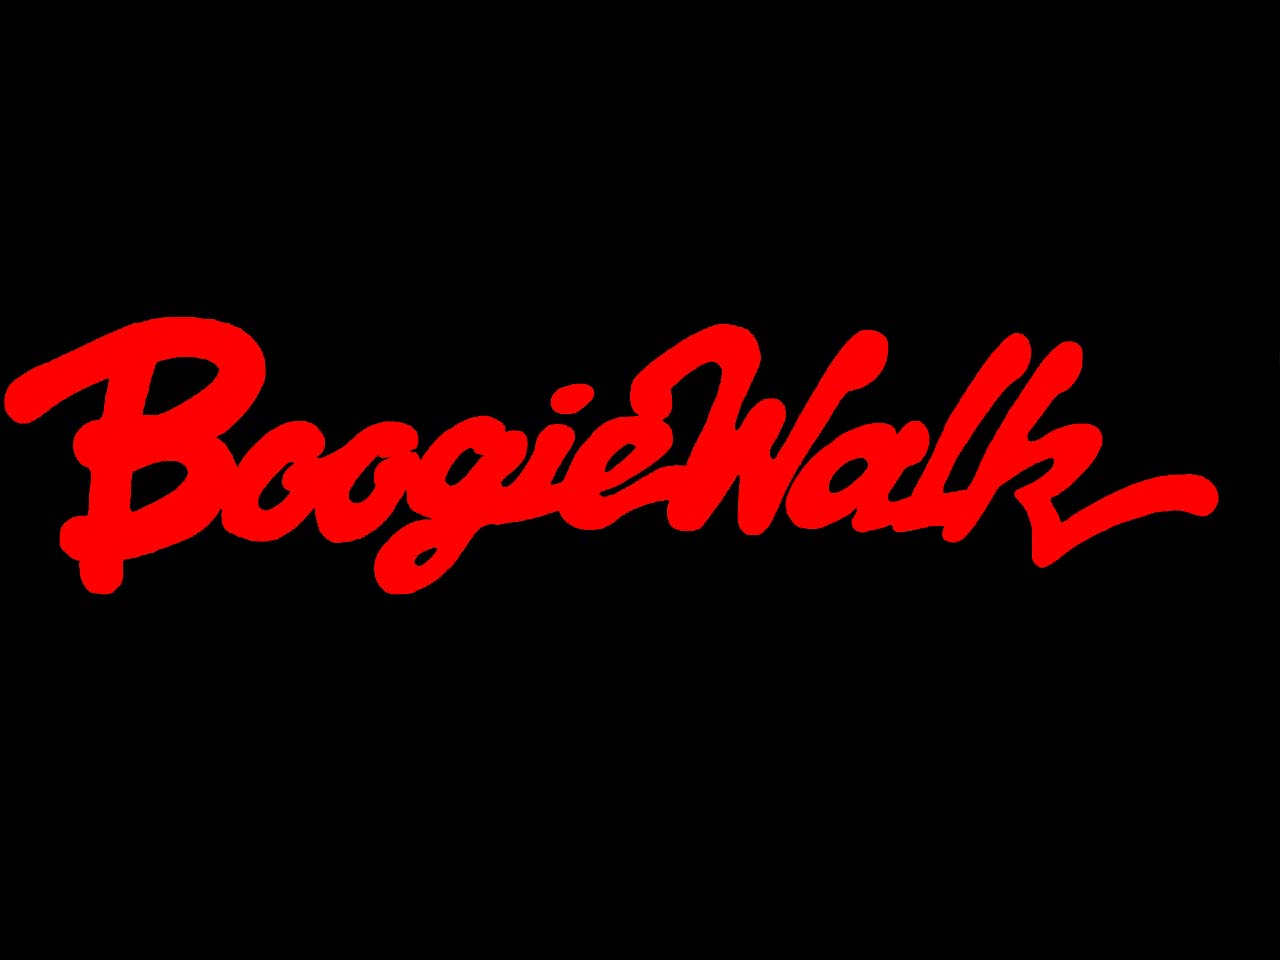 BoogieWalk